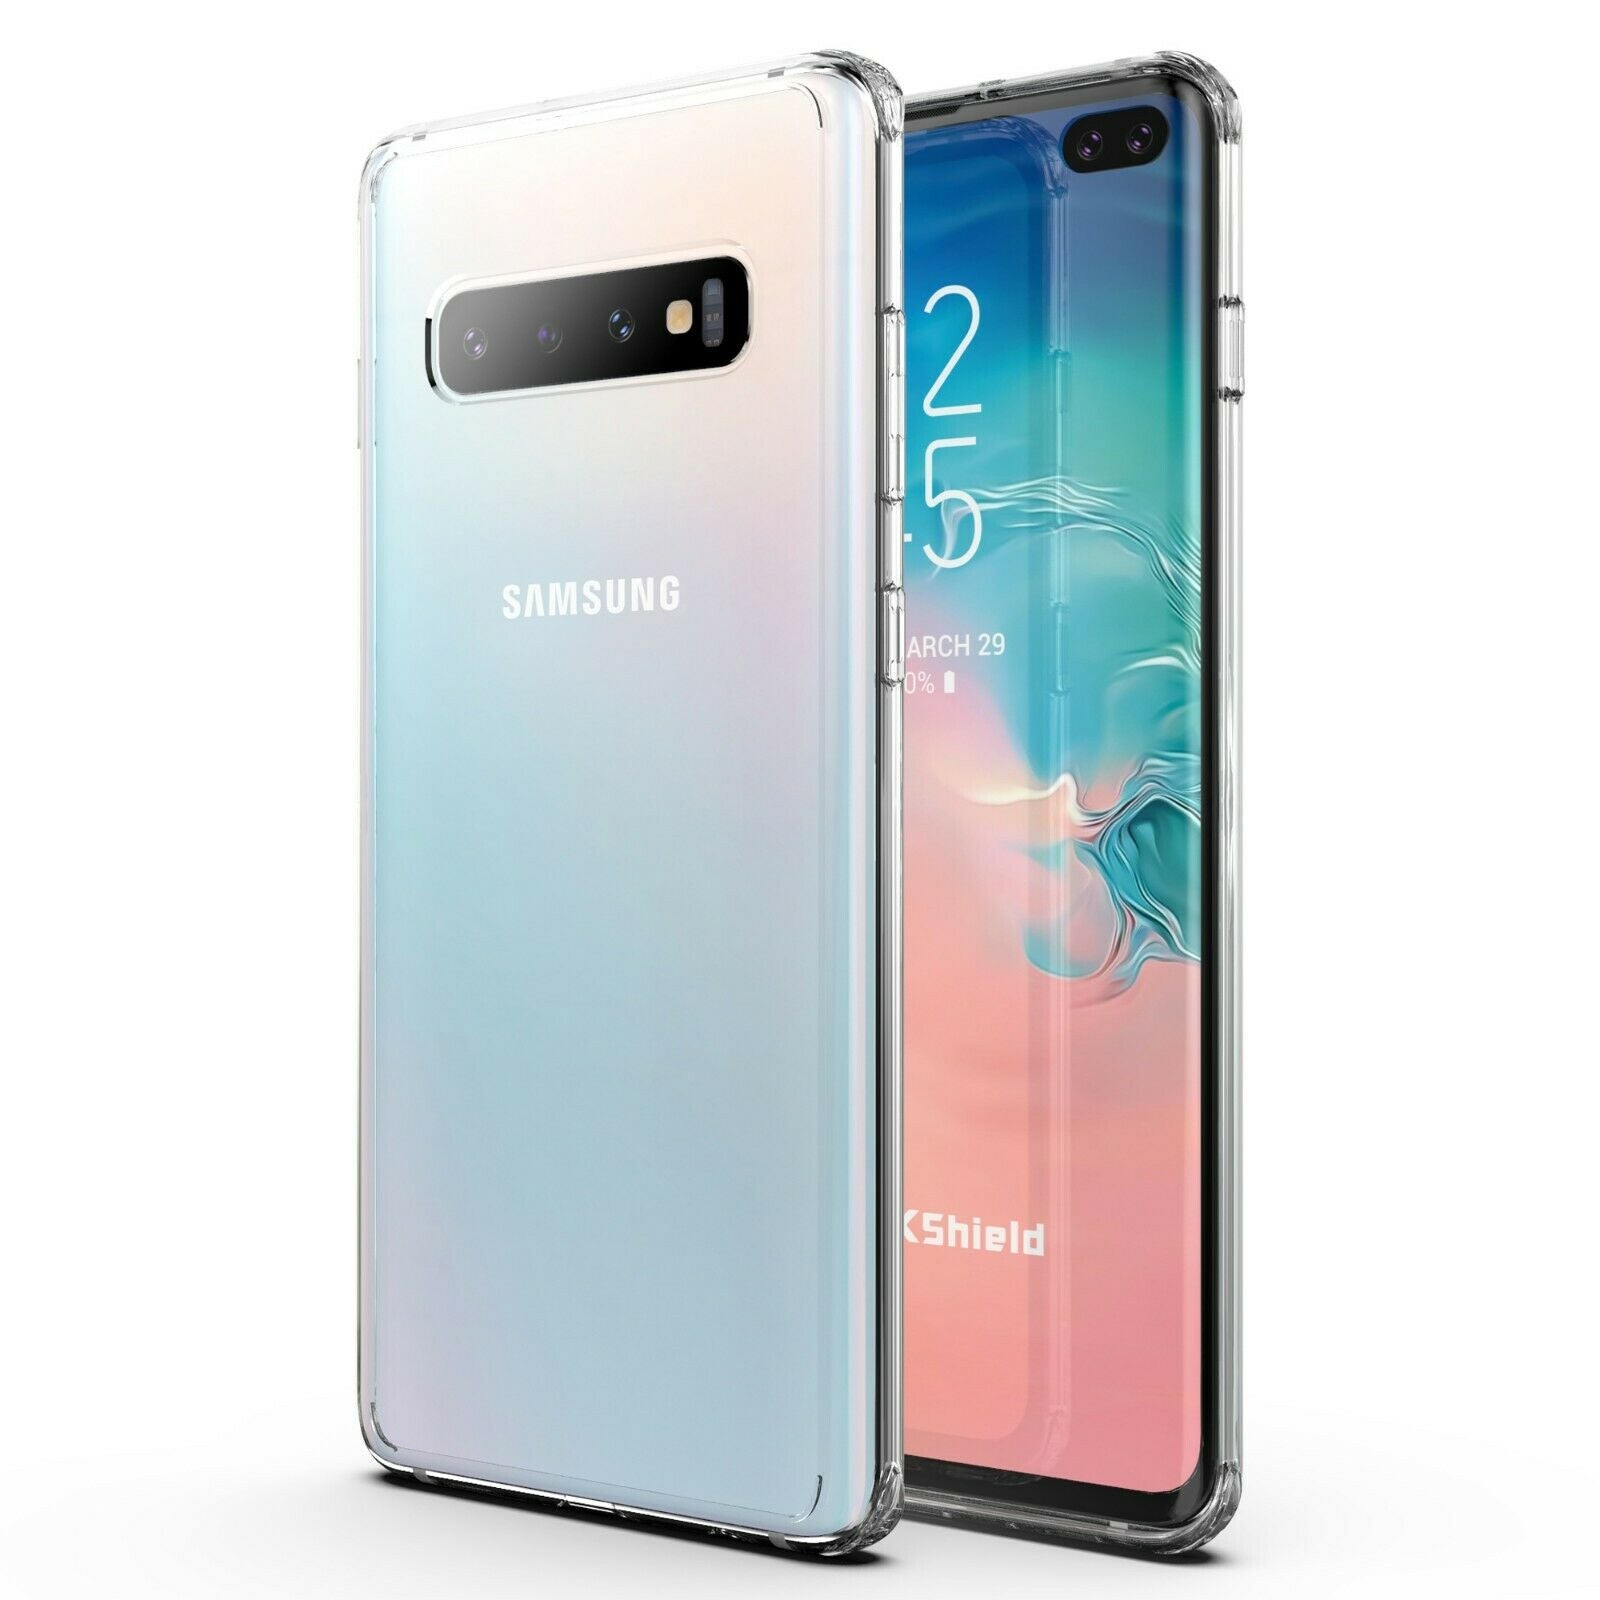 Samsung Galaxy S10E Case Shockproof Crystal Bumper Case Cover